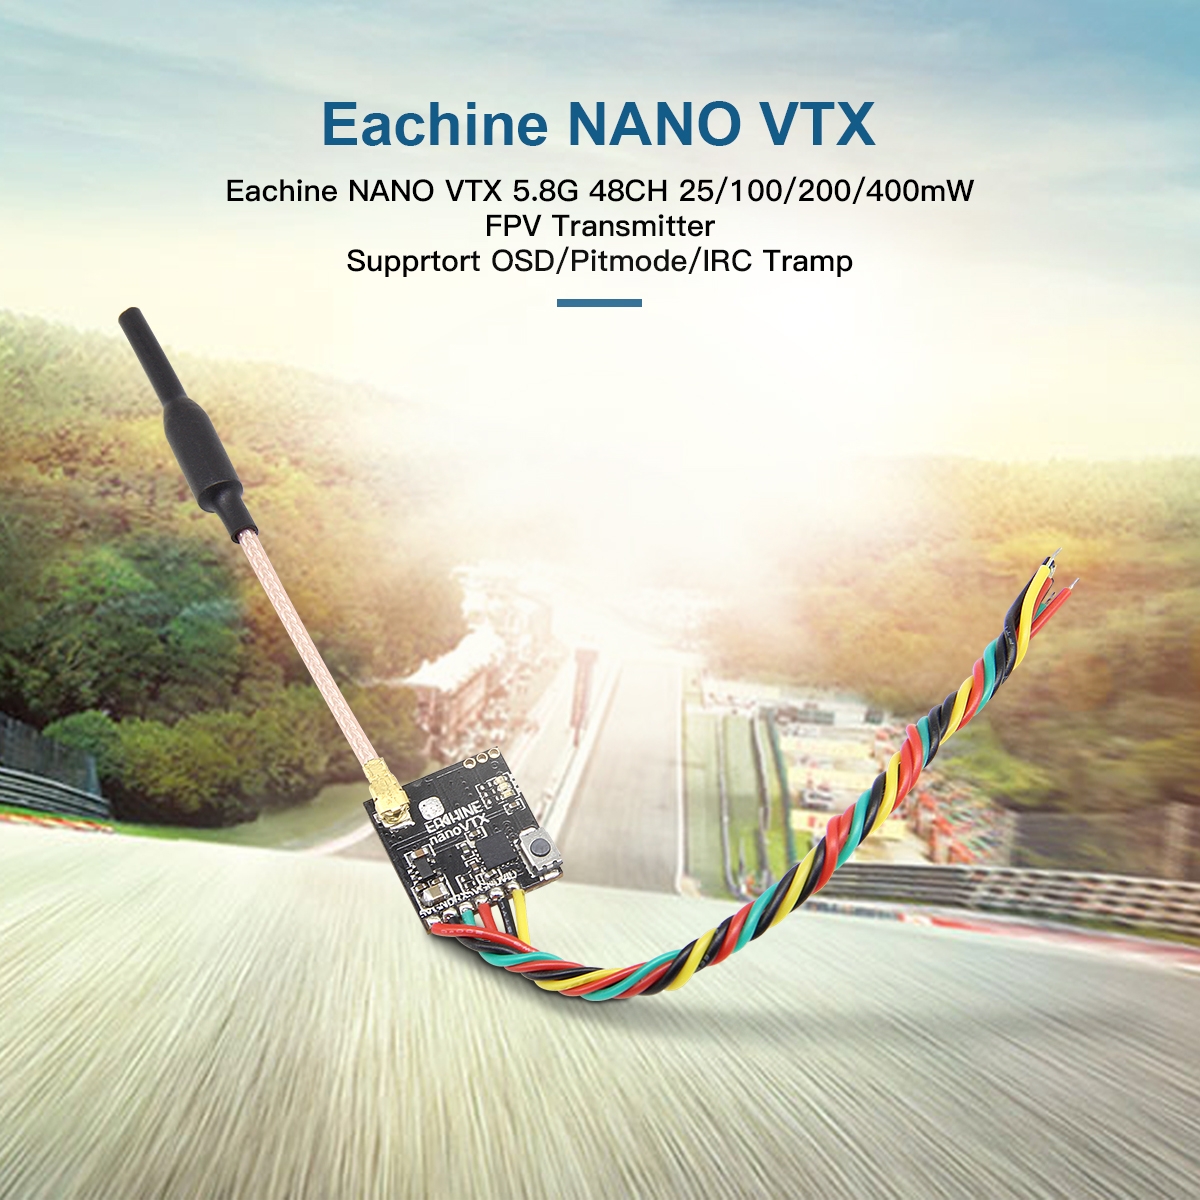 Eachine NANO VTX 5.8GHz 48CH 25/100/200/400mW Switchable FPV Transmitter Support OSD/Pitmode/IRC Tramp